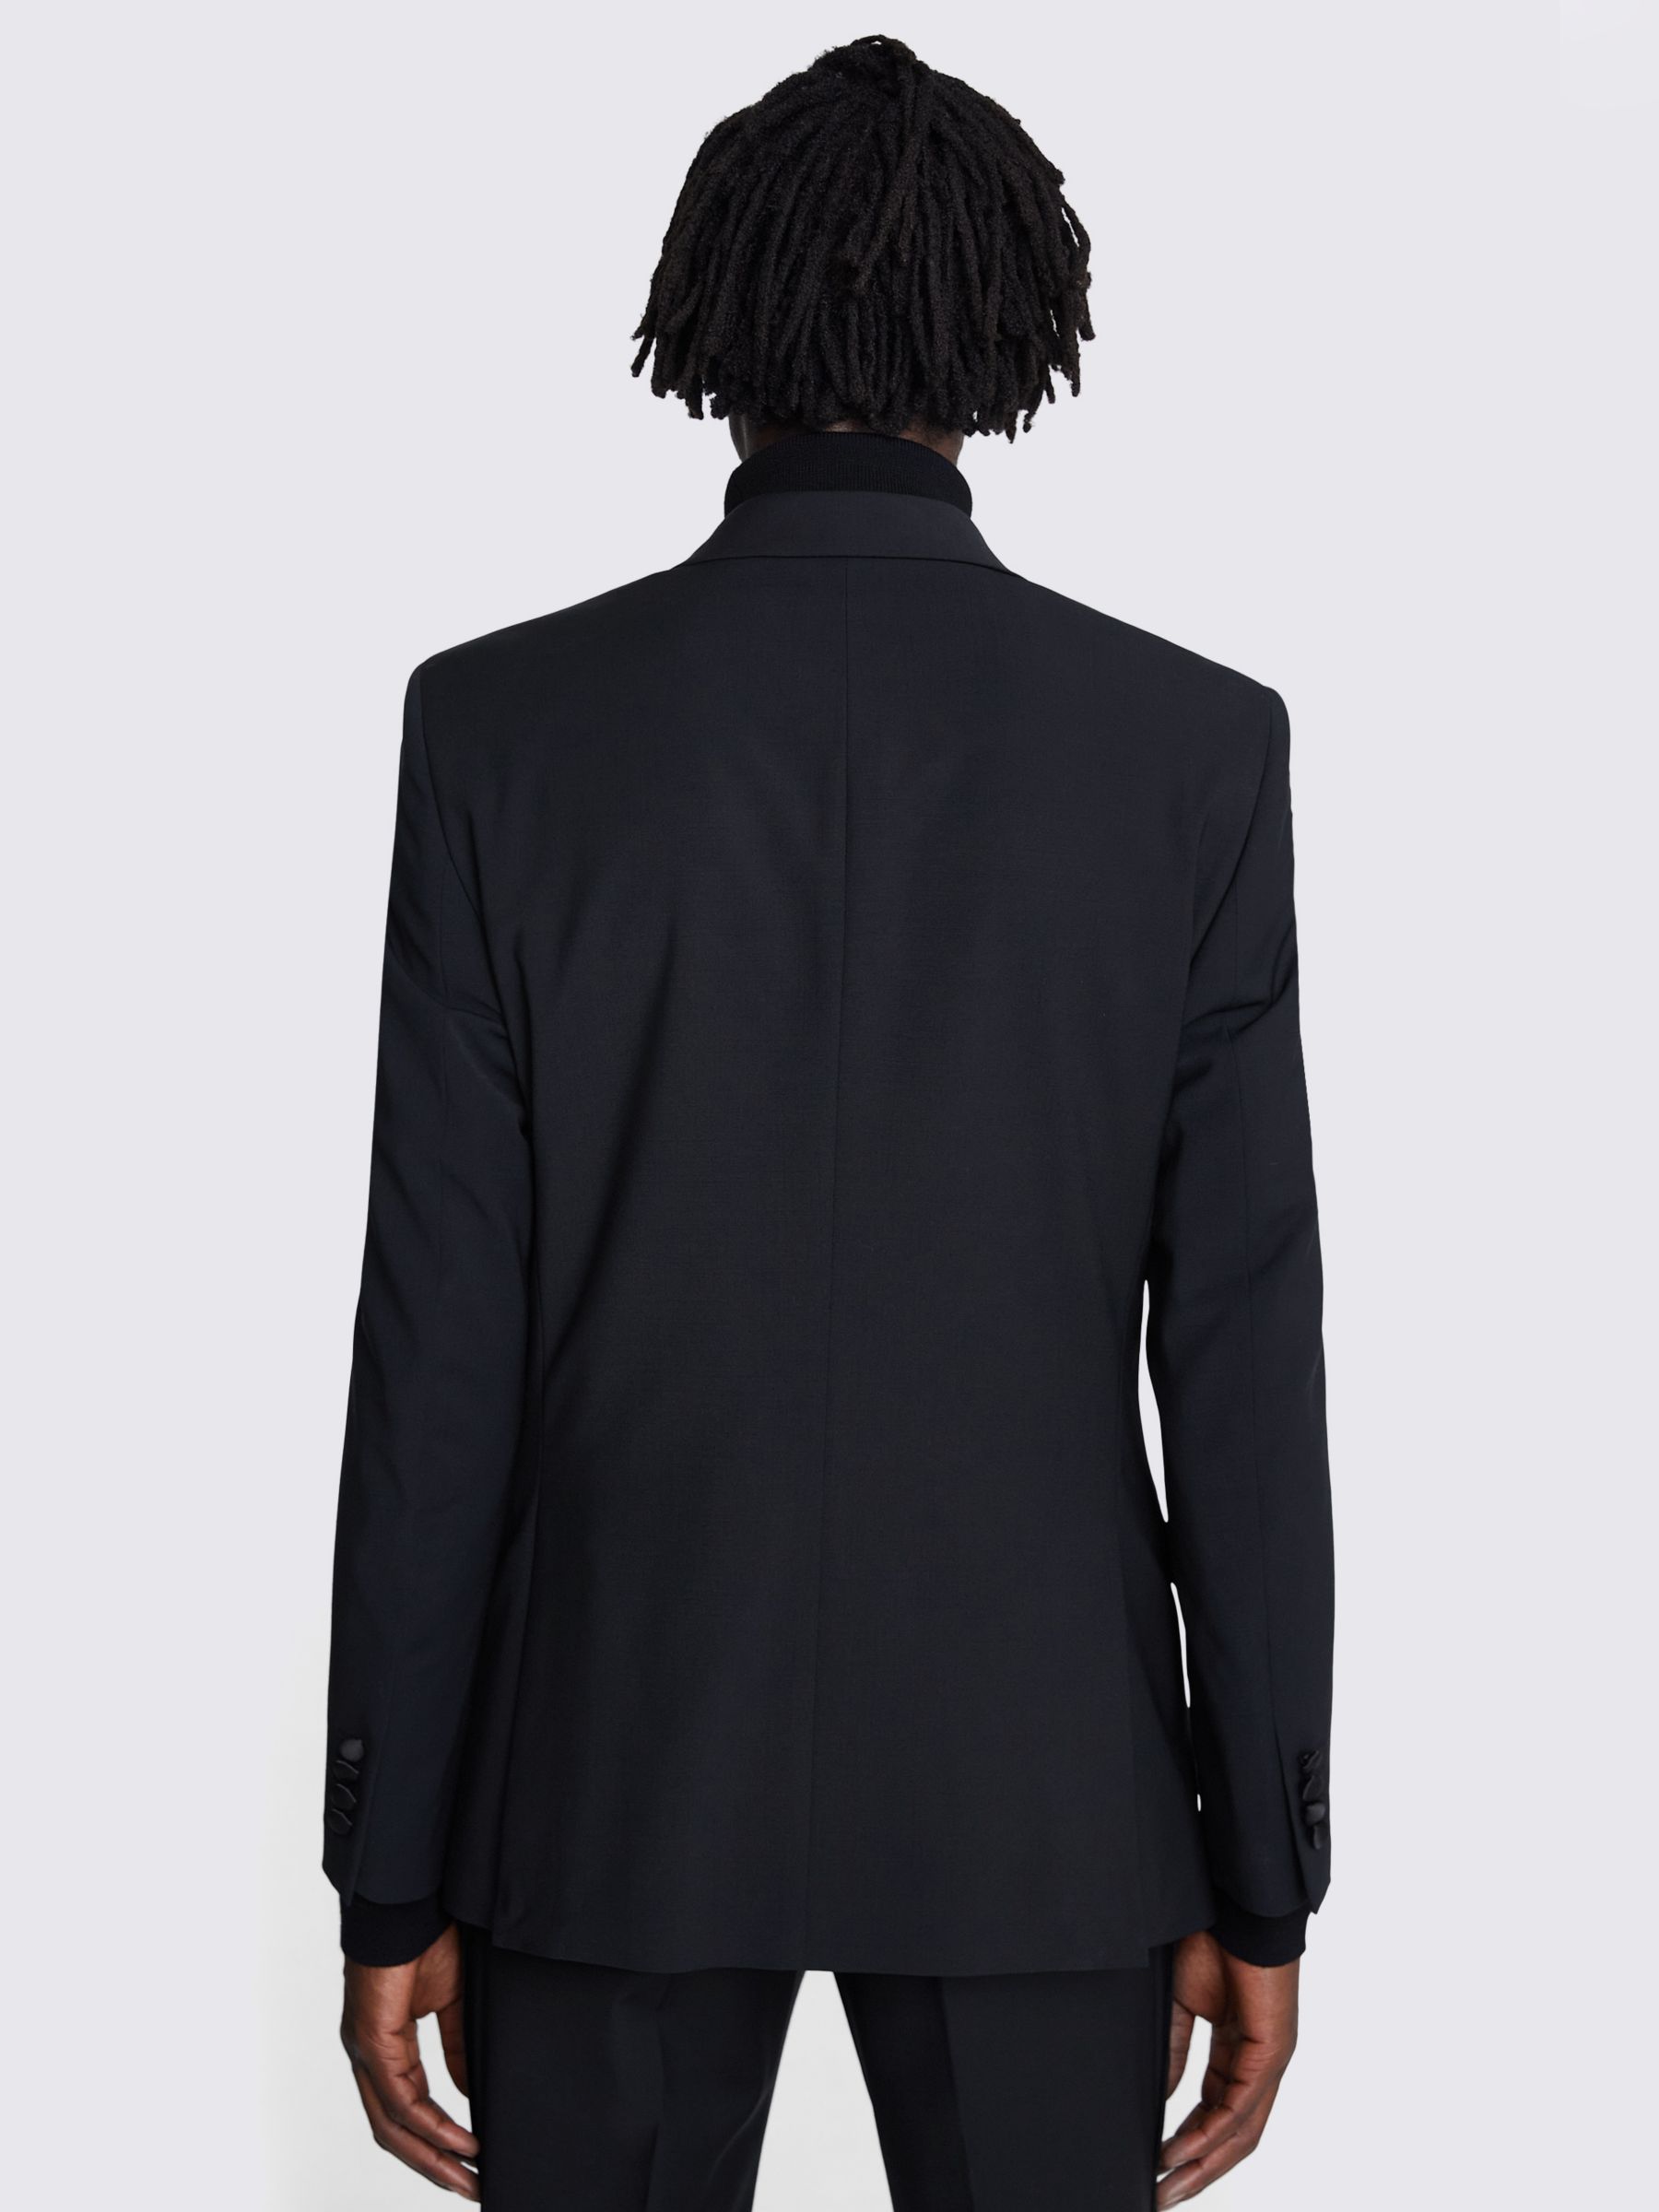 Moss Tailored Fit Performance Peak Lapel Dress Jacket, Black, 36S